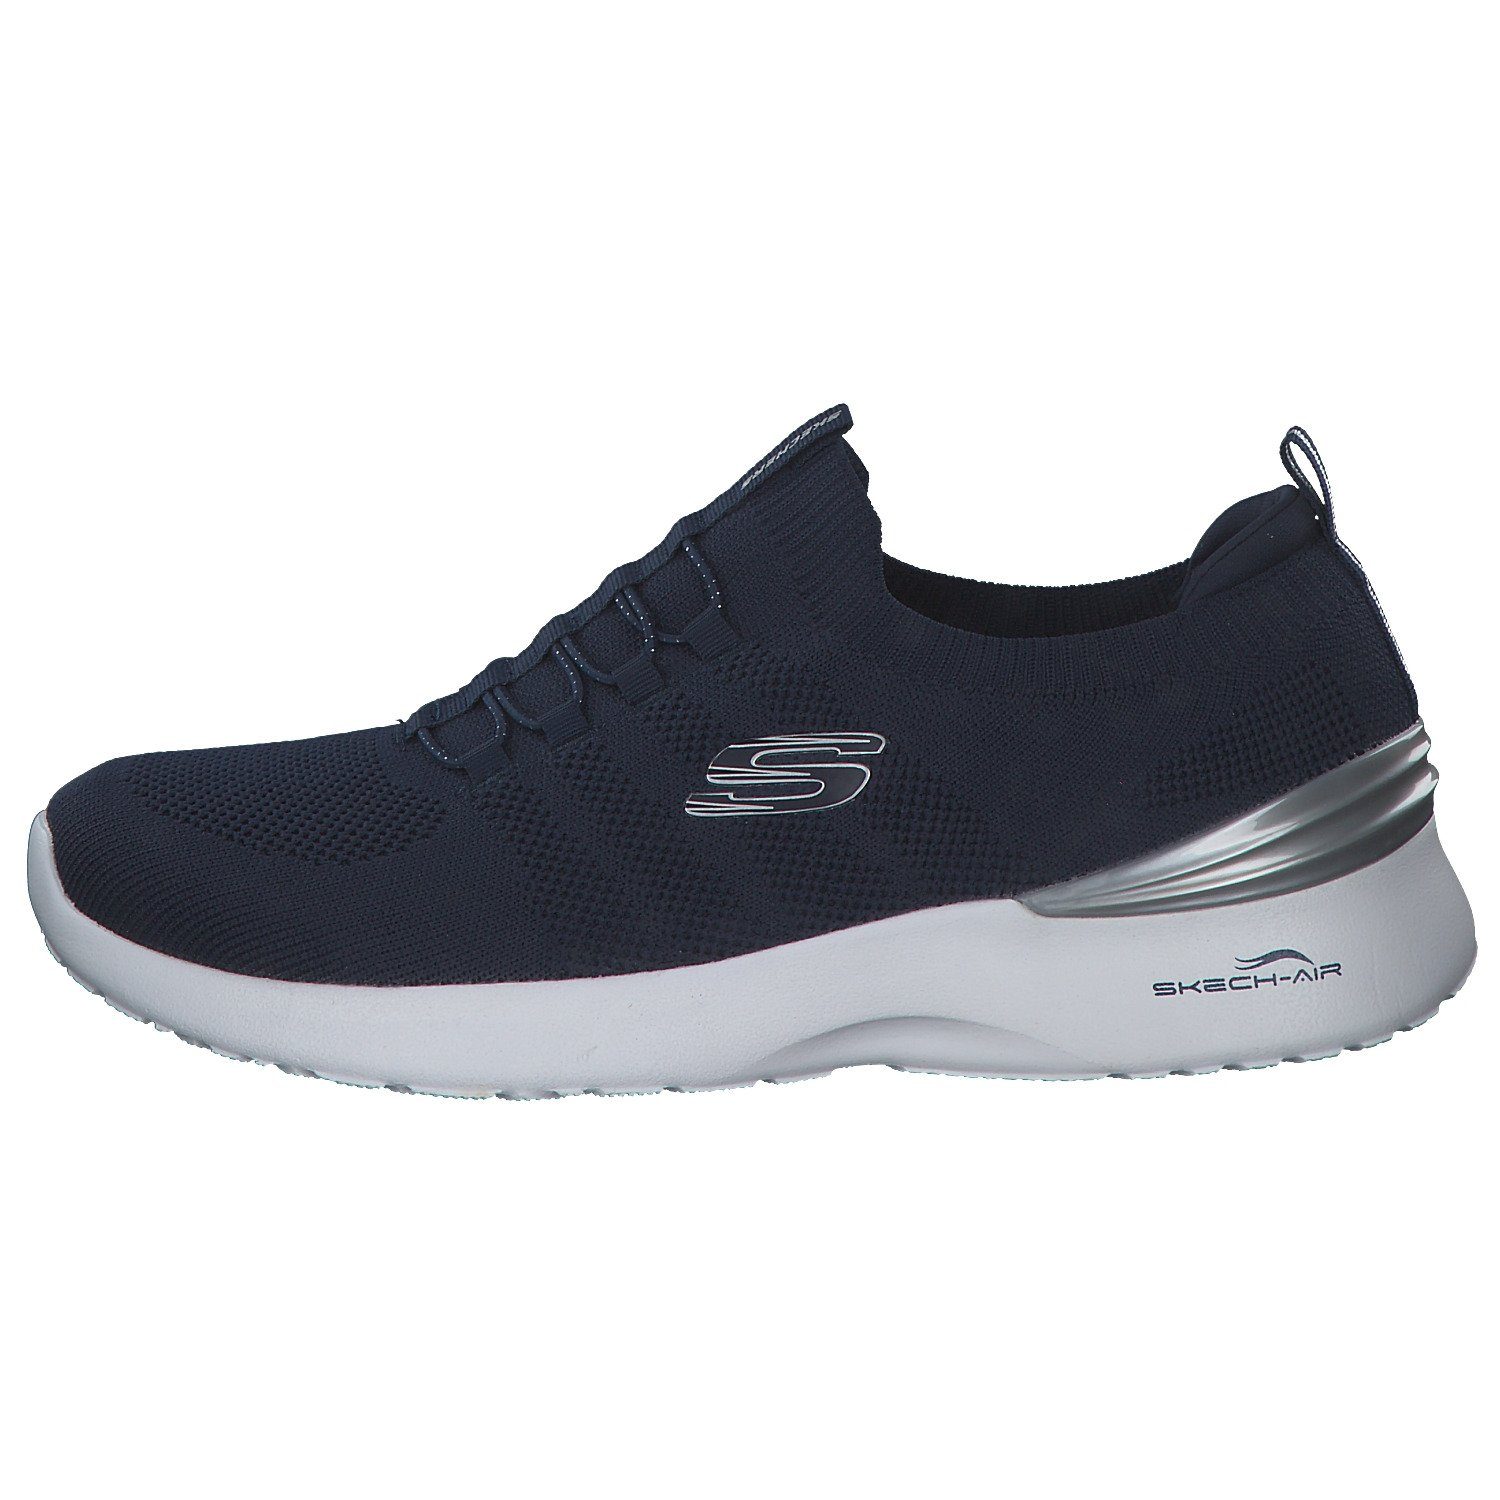 Sneaker navy Skechers Air Skech 149754 (20203075) Dynamight Perfect silver Skechers